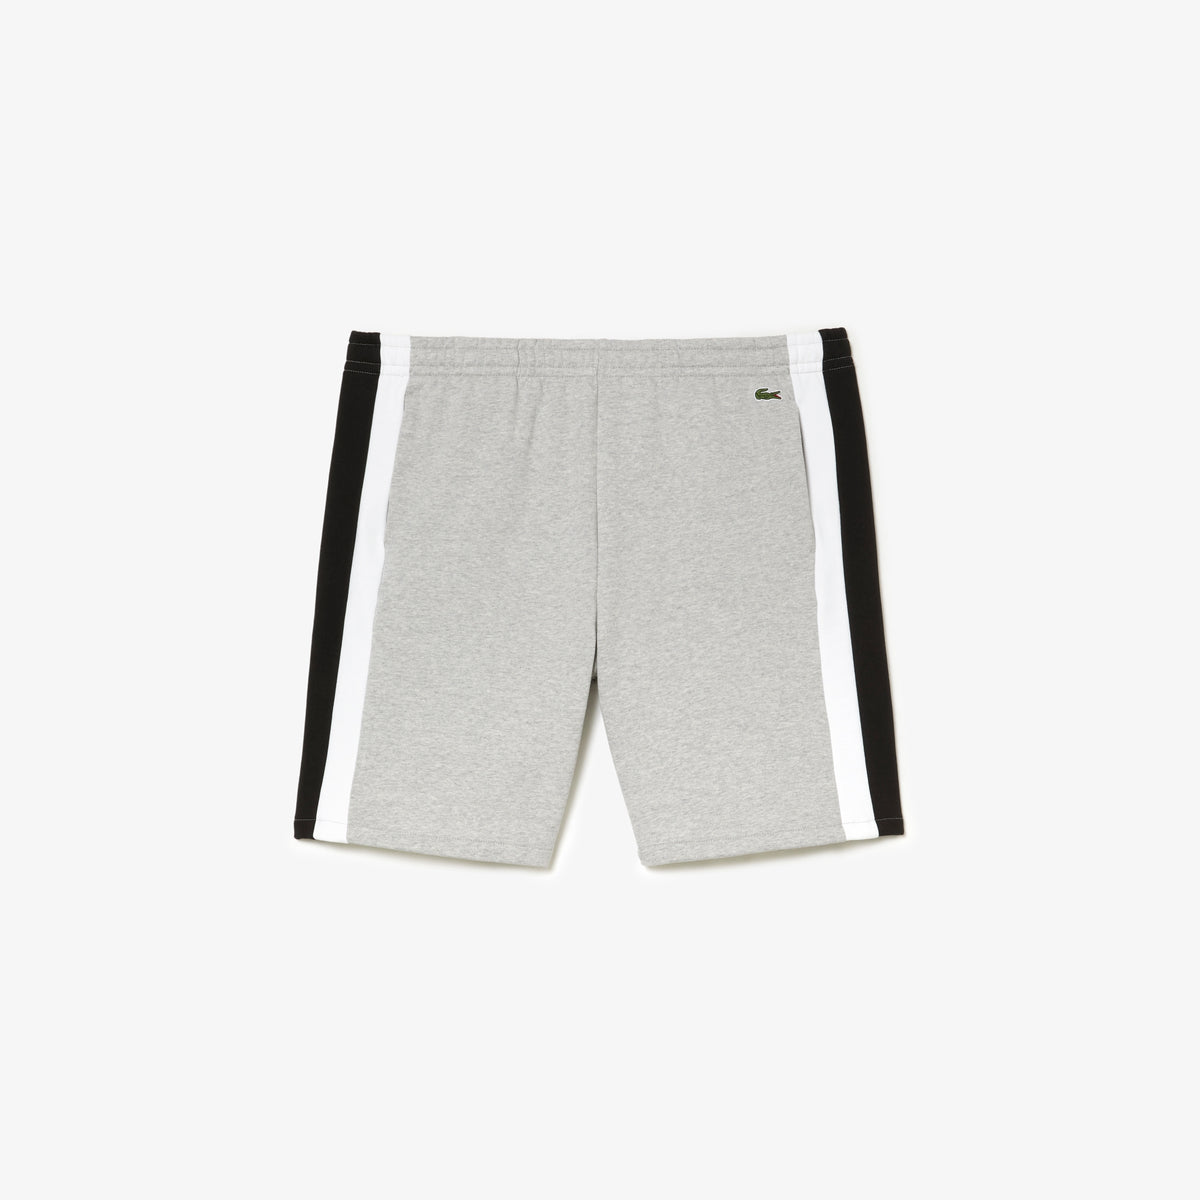 Lacoste - Brushed Fleece Colorblock Shorts - Grey Chine/Black